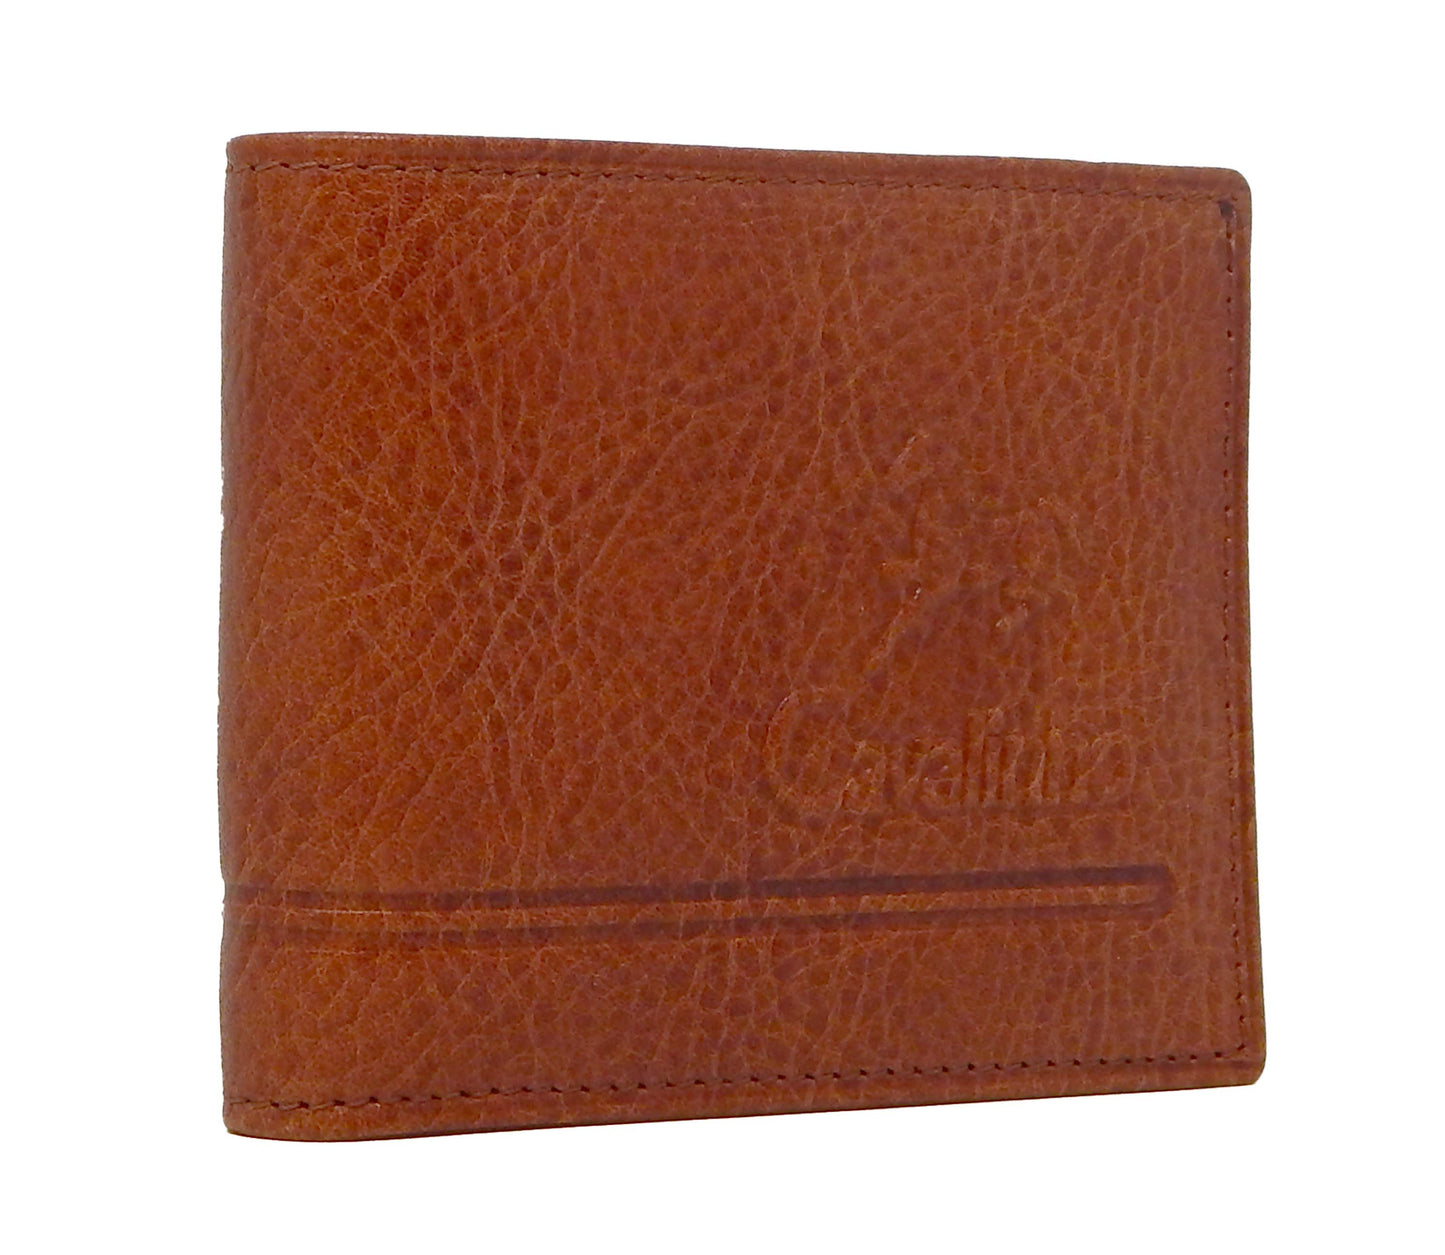 Cavalinho Men's Leather Trifold Leather Wallet - SaddleBrown - 28160529.13.99_2